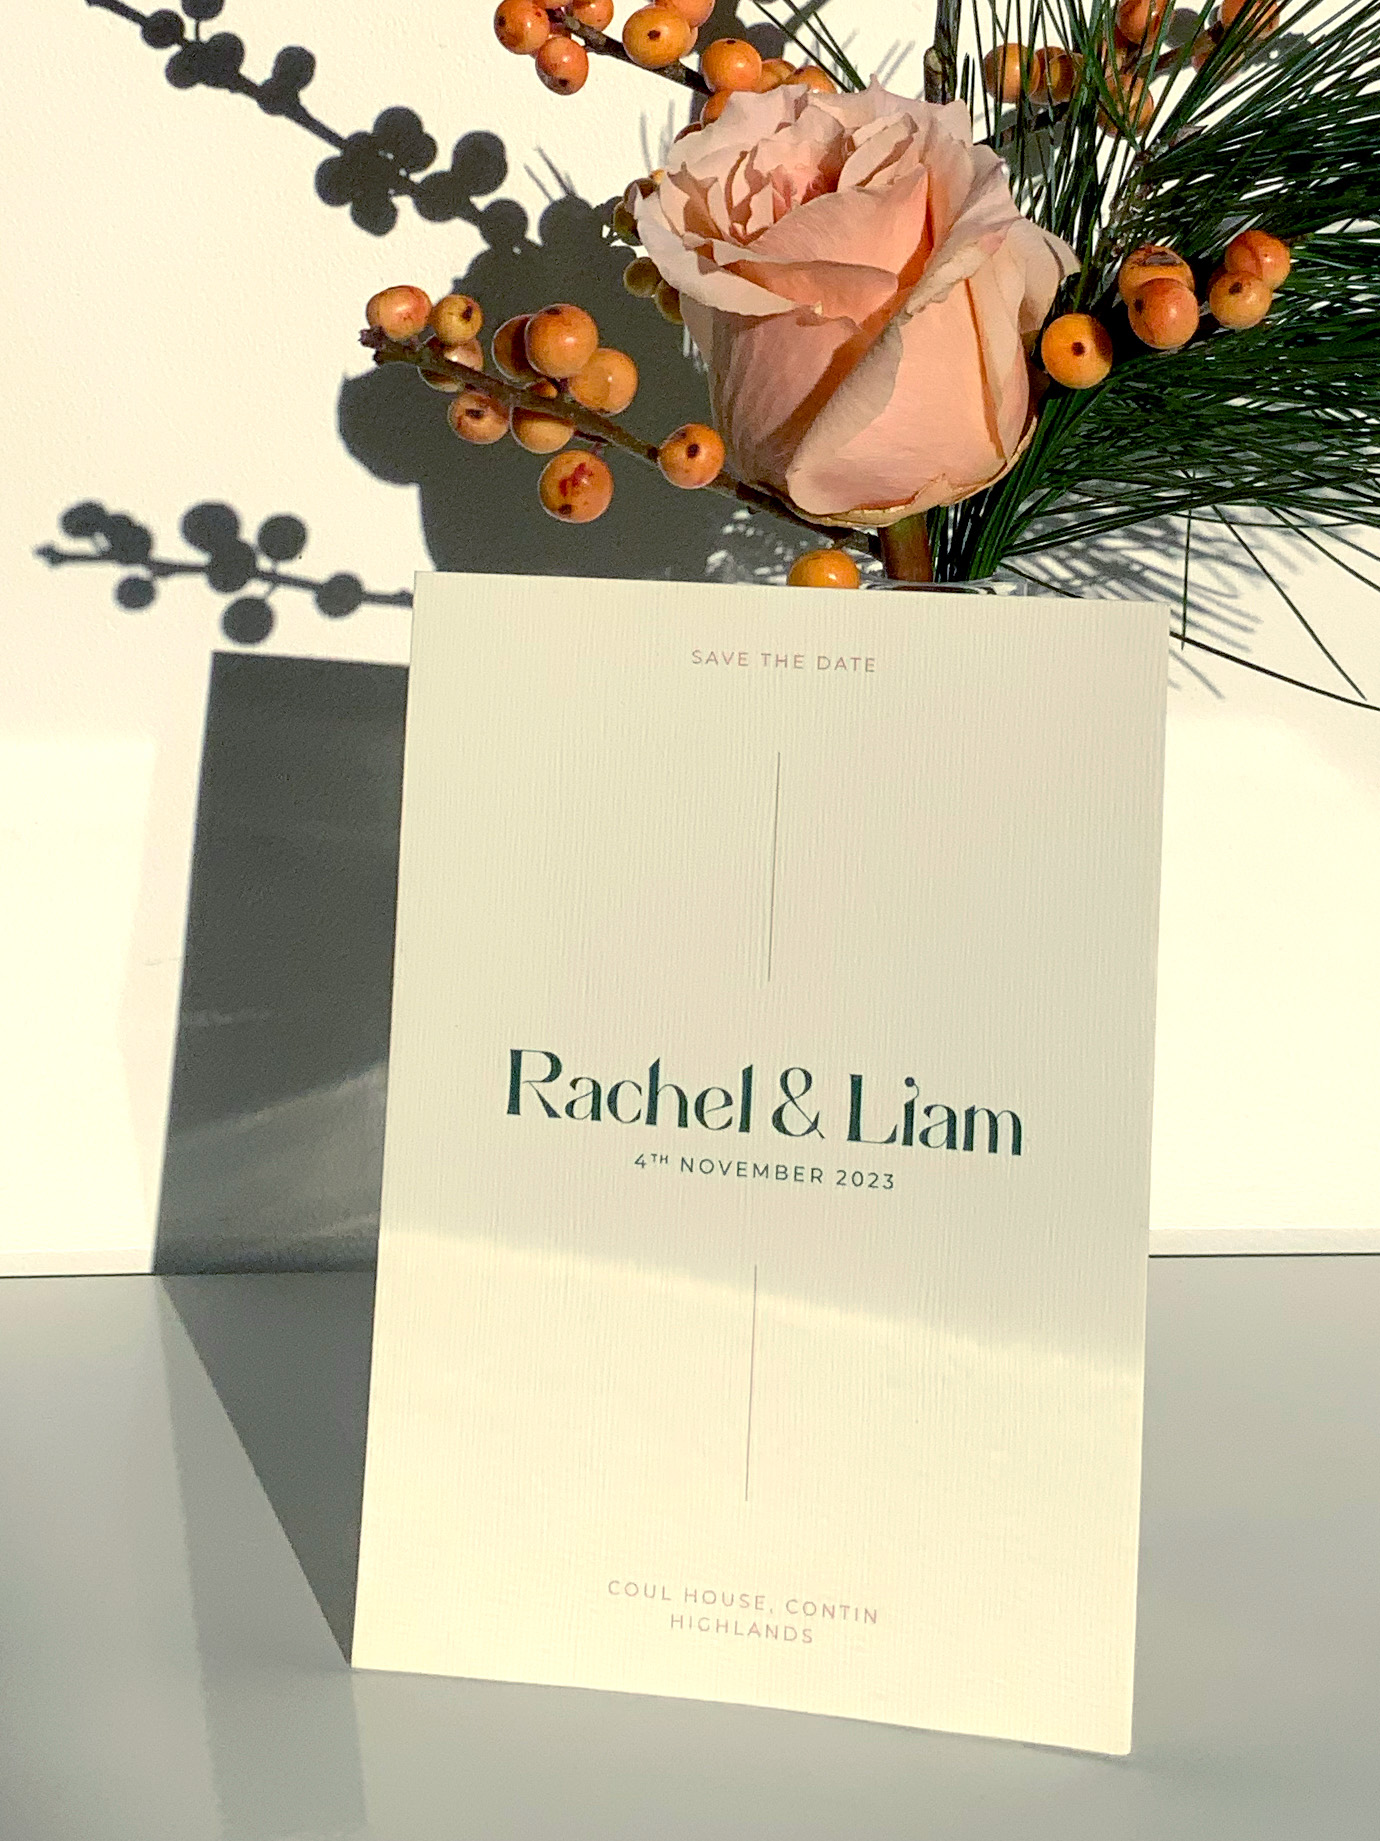 Rachel & Liam's wedding invitation